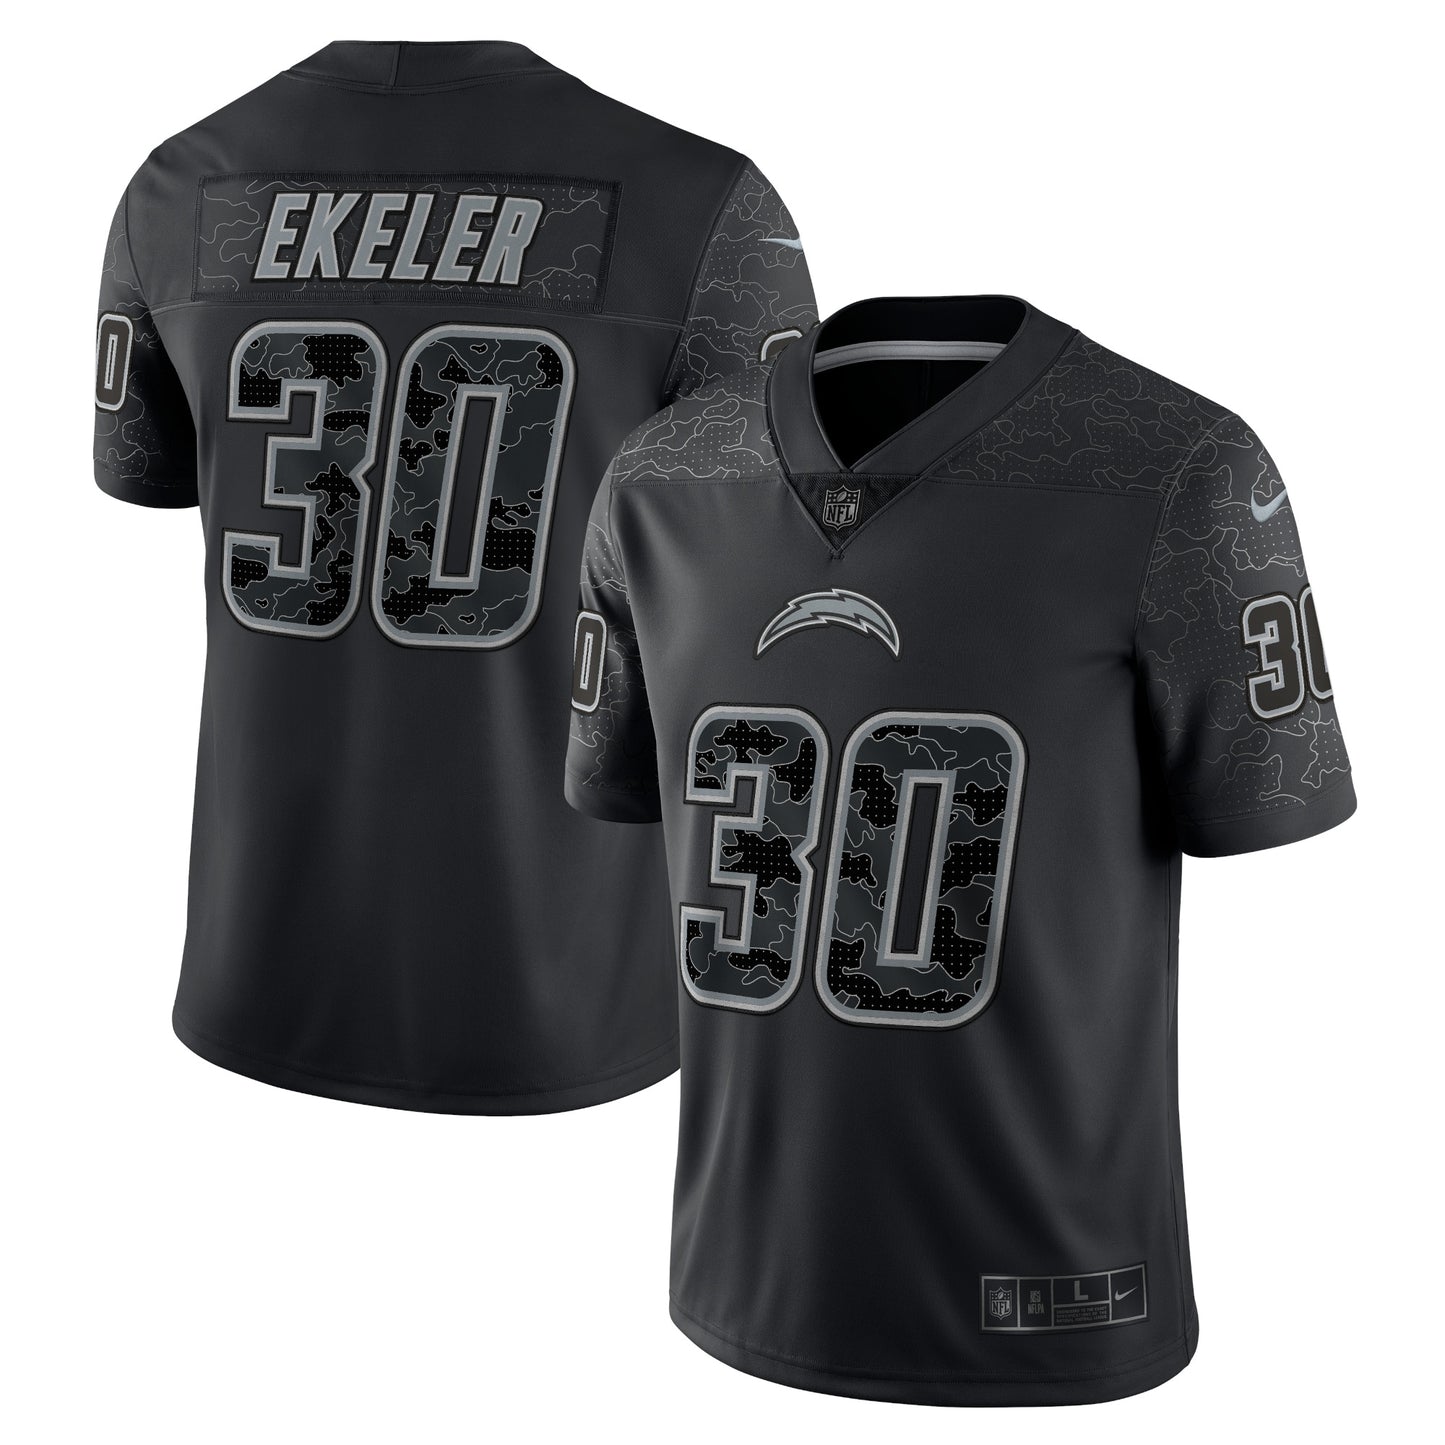 Austin Ekeler Los Angeles Chargers Nike RFLCTV Limited Jersey - Black